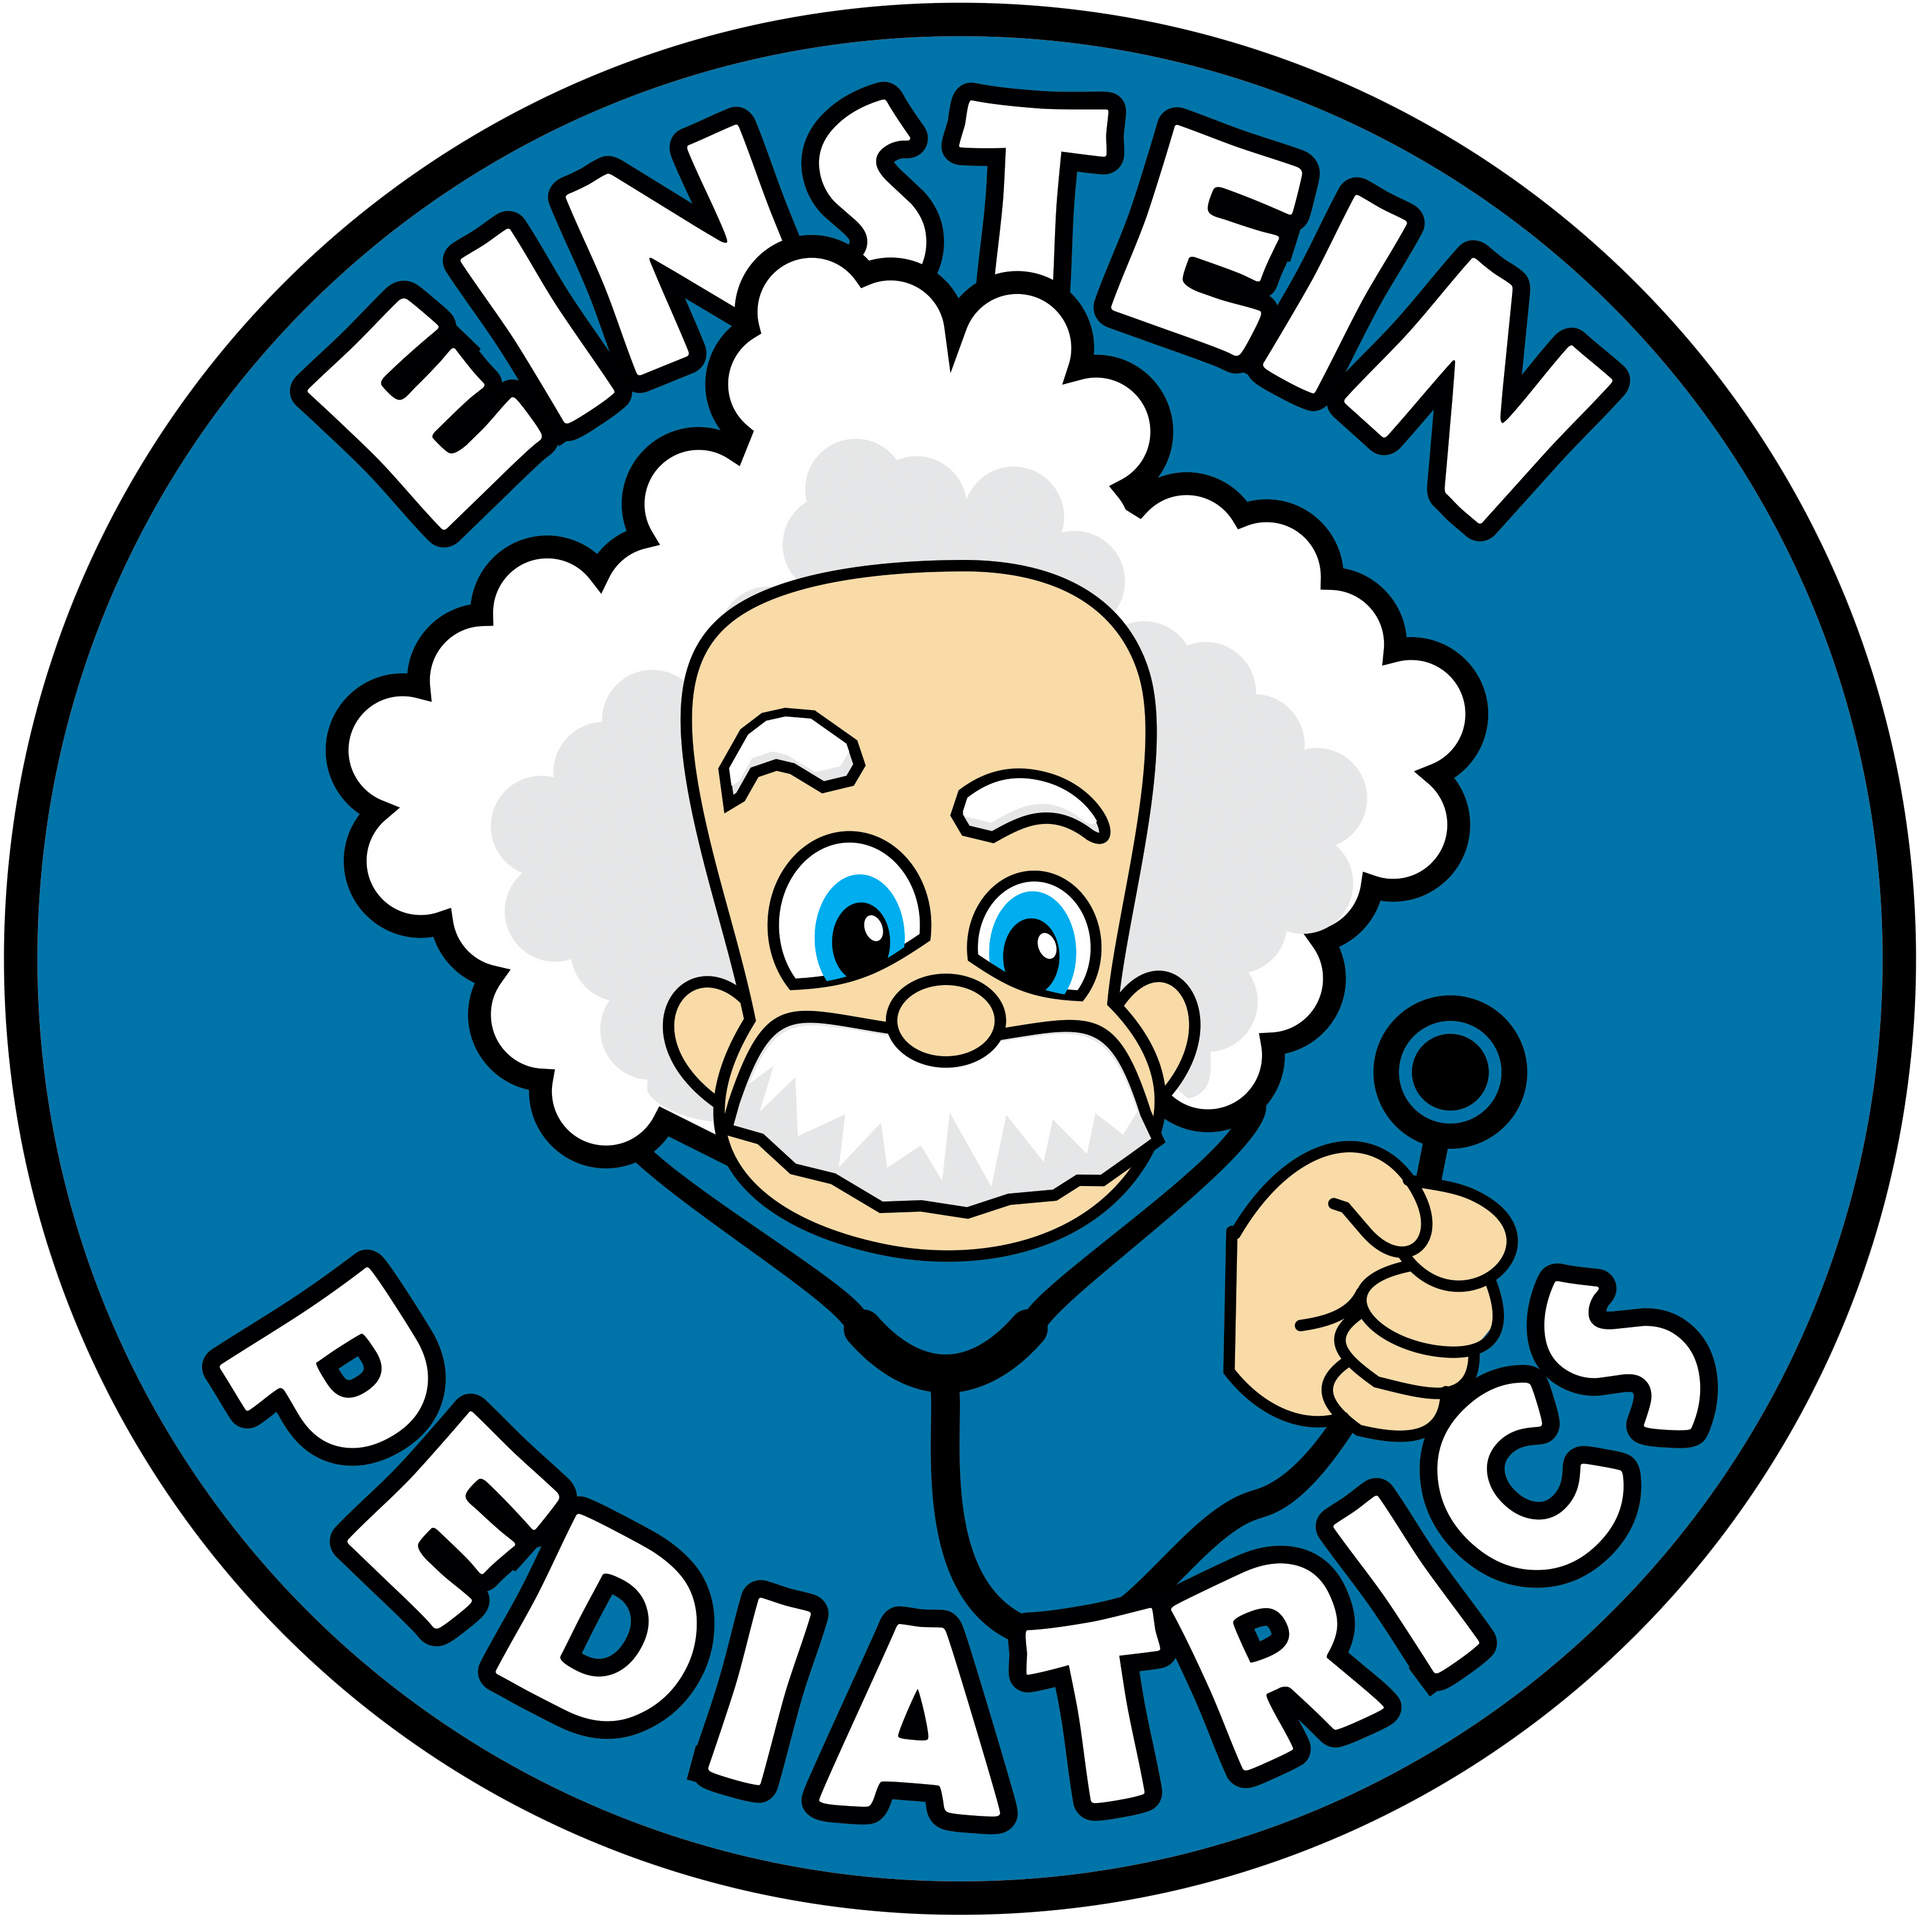 A logo for einstein pediatrics shows a cartoon doctor holding a stethoscope